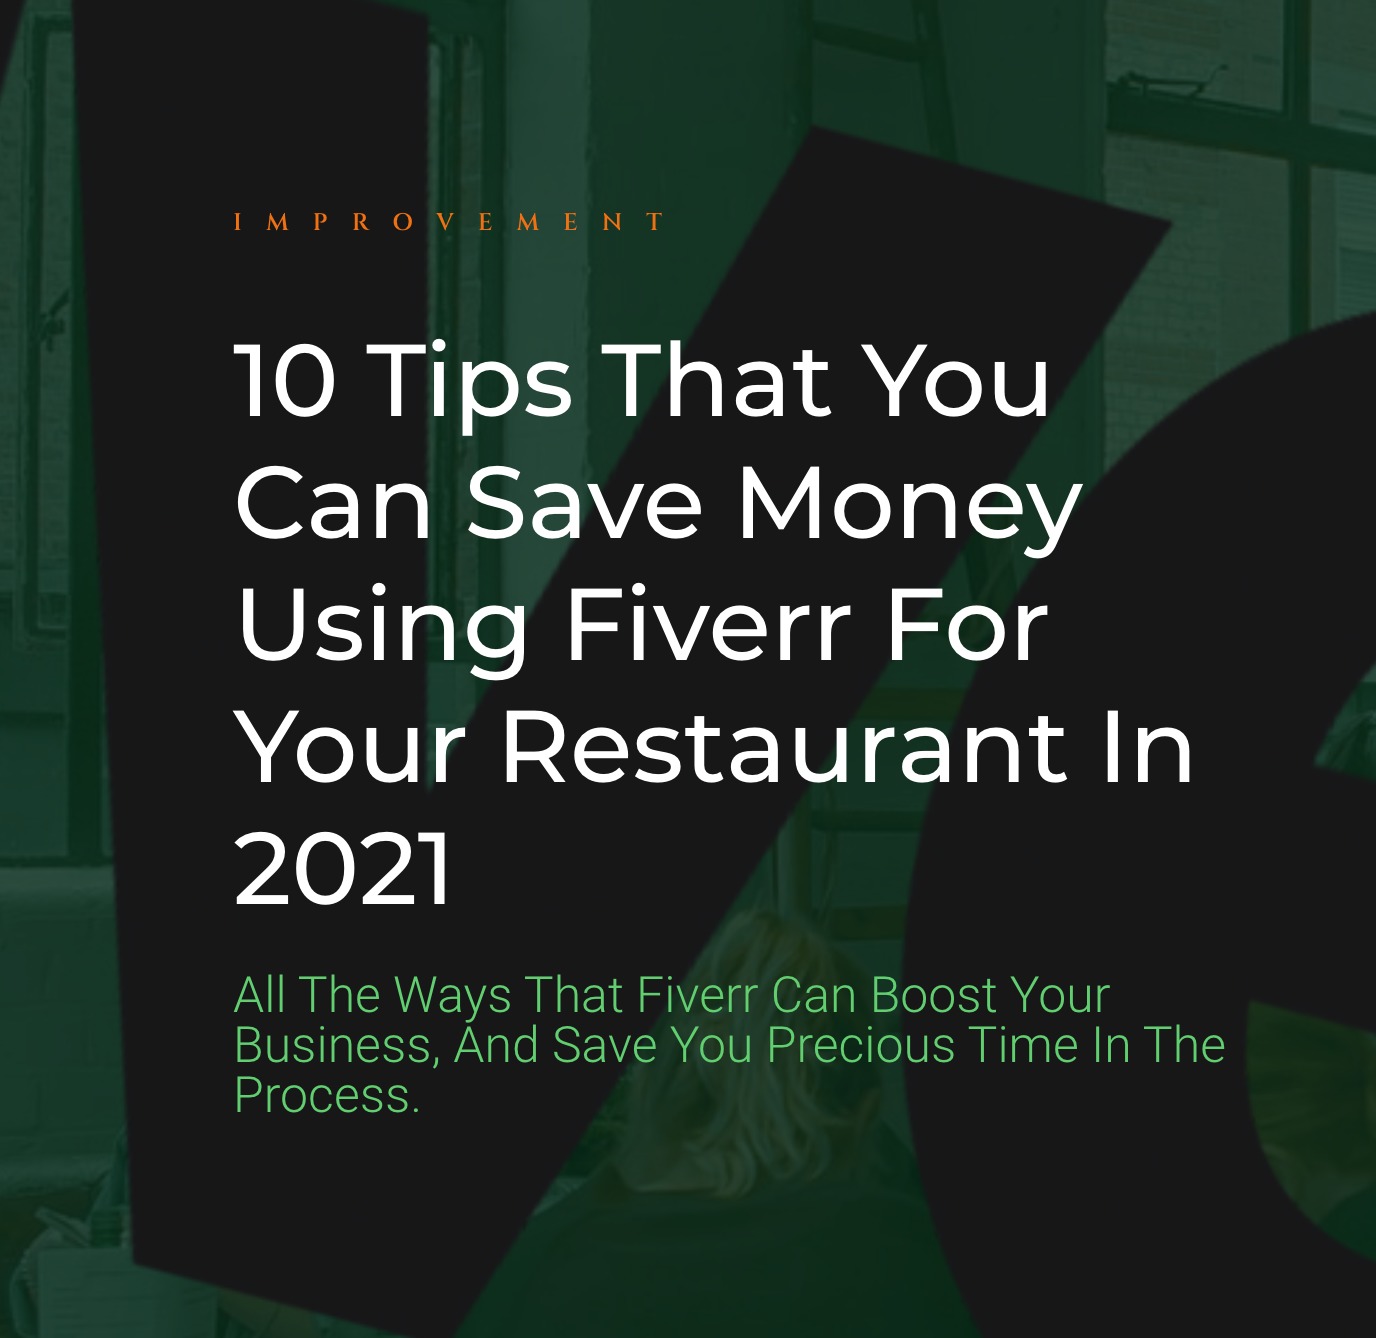 Fiverr for your restaurant